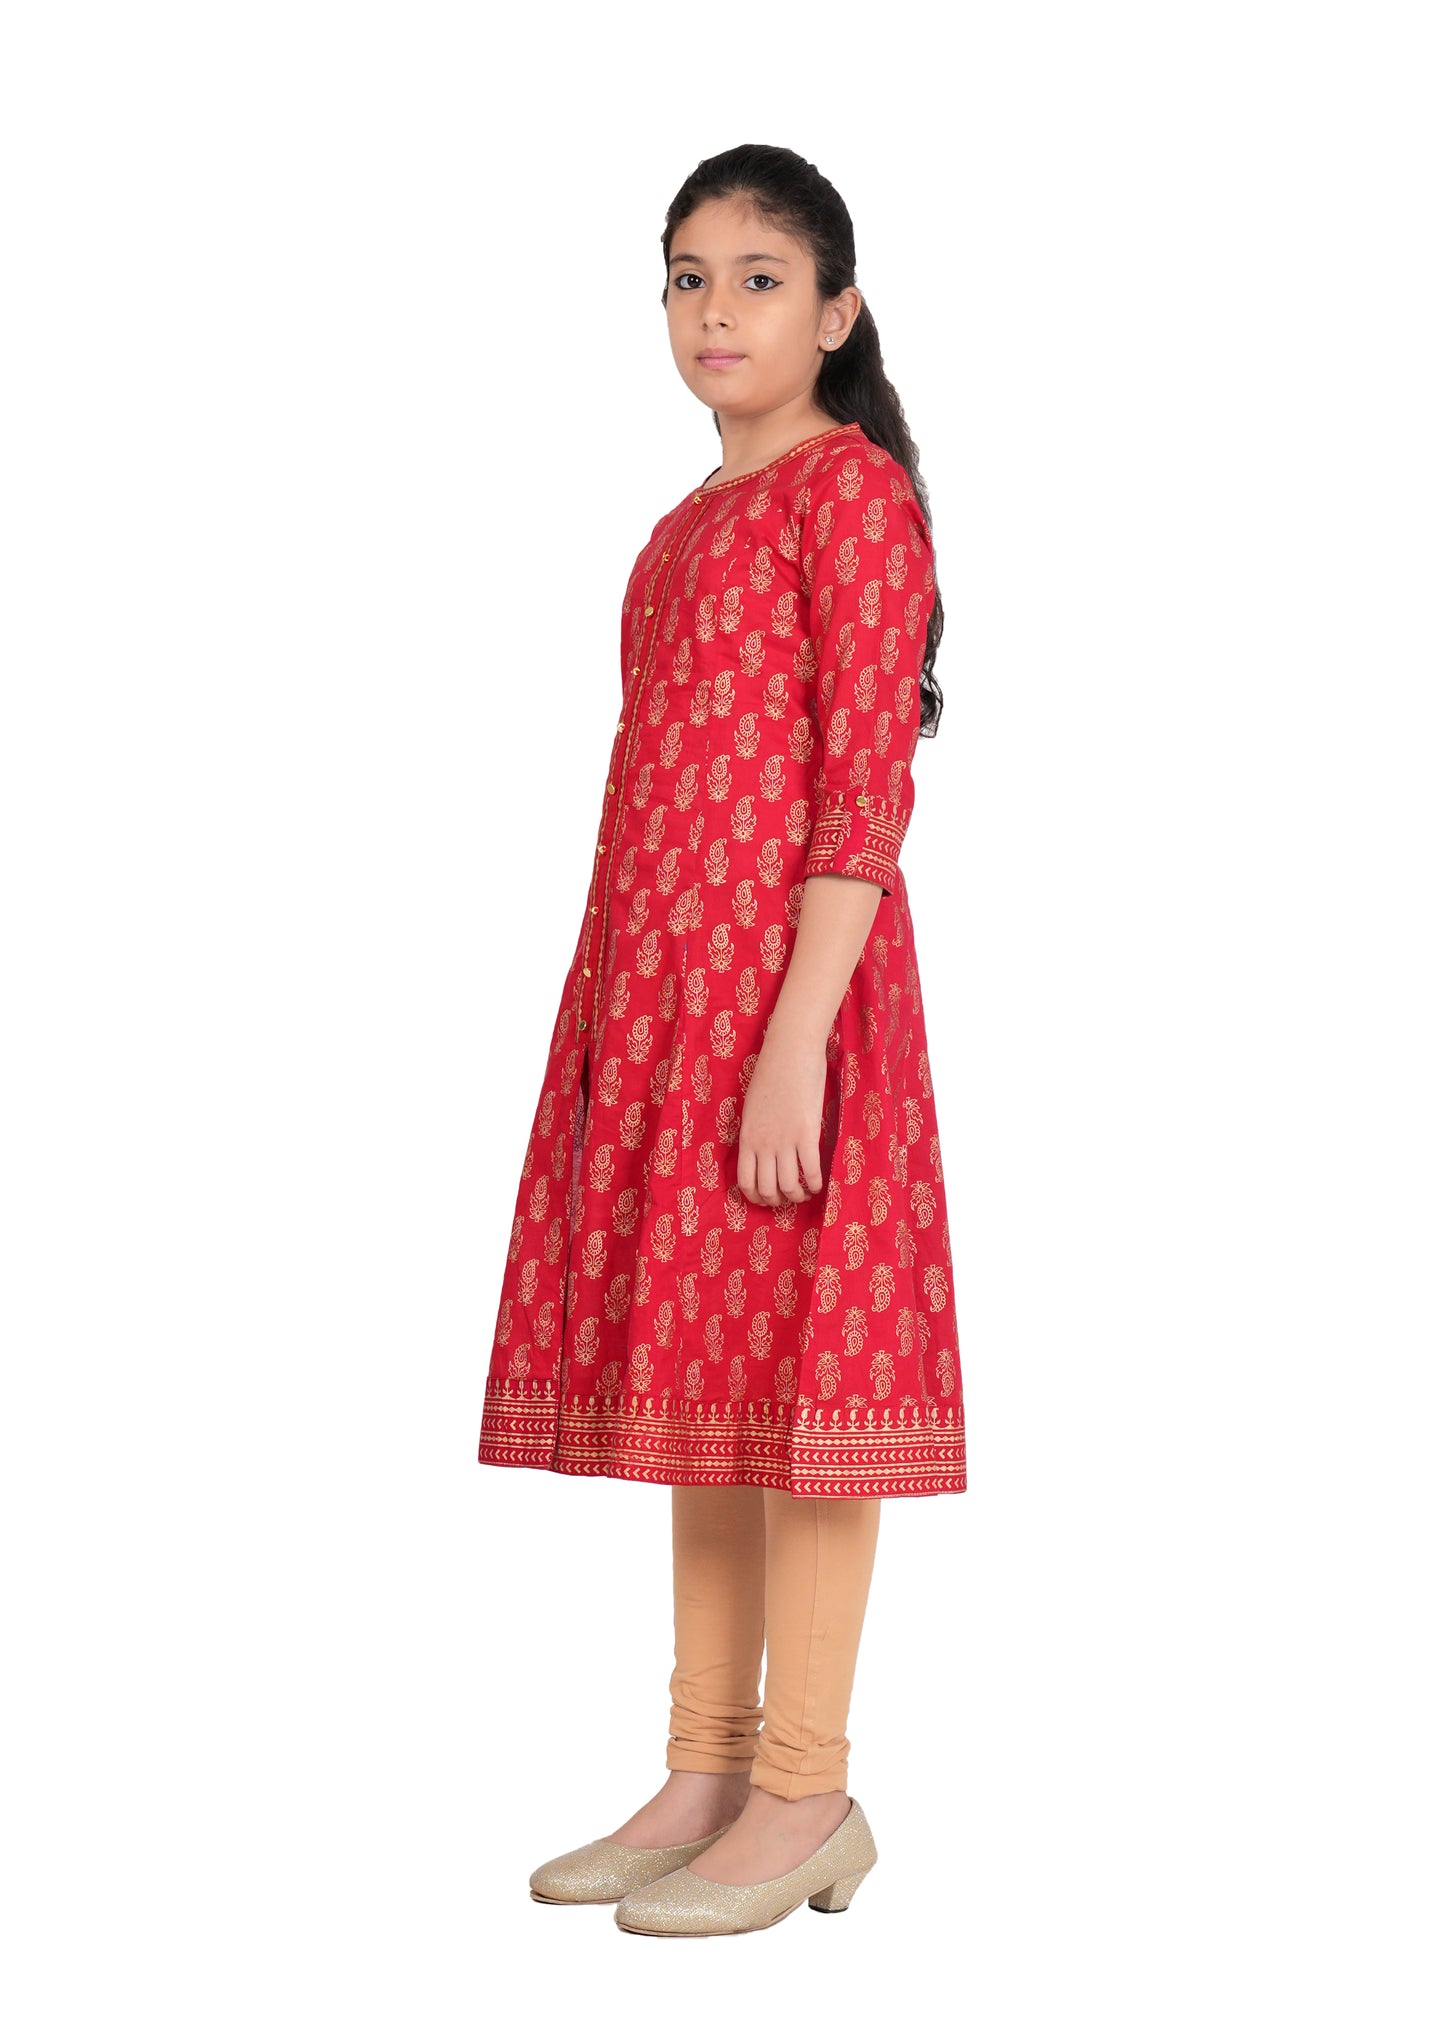 Yash Gallery Kids Cotton Gold Print Anarkali Dress (RED)